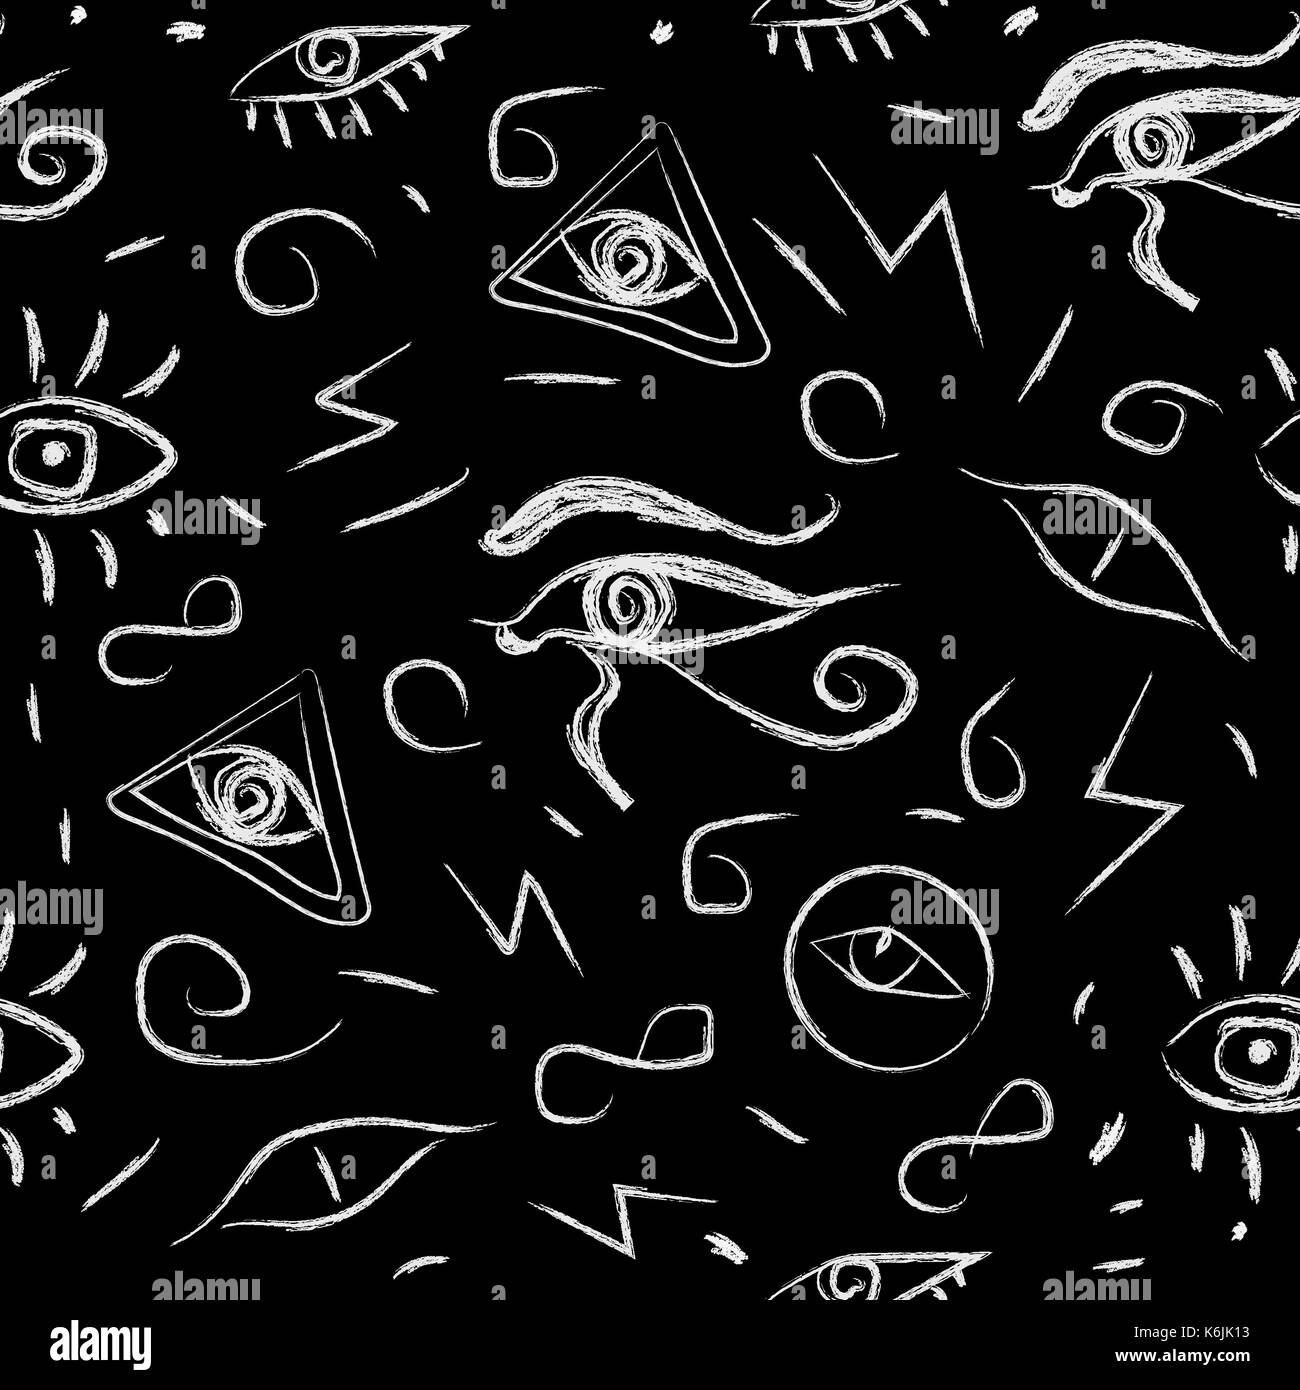 Psychedelic Eye Images  Free Download on Freepik